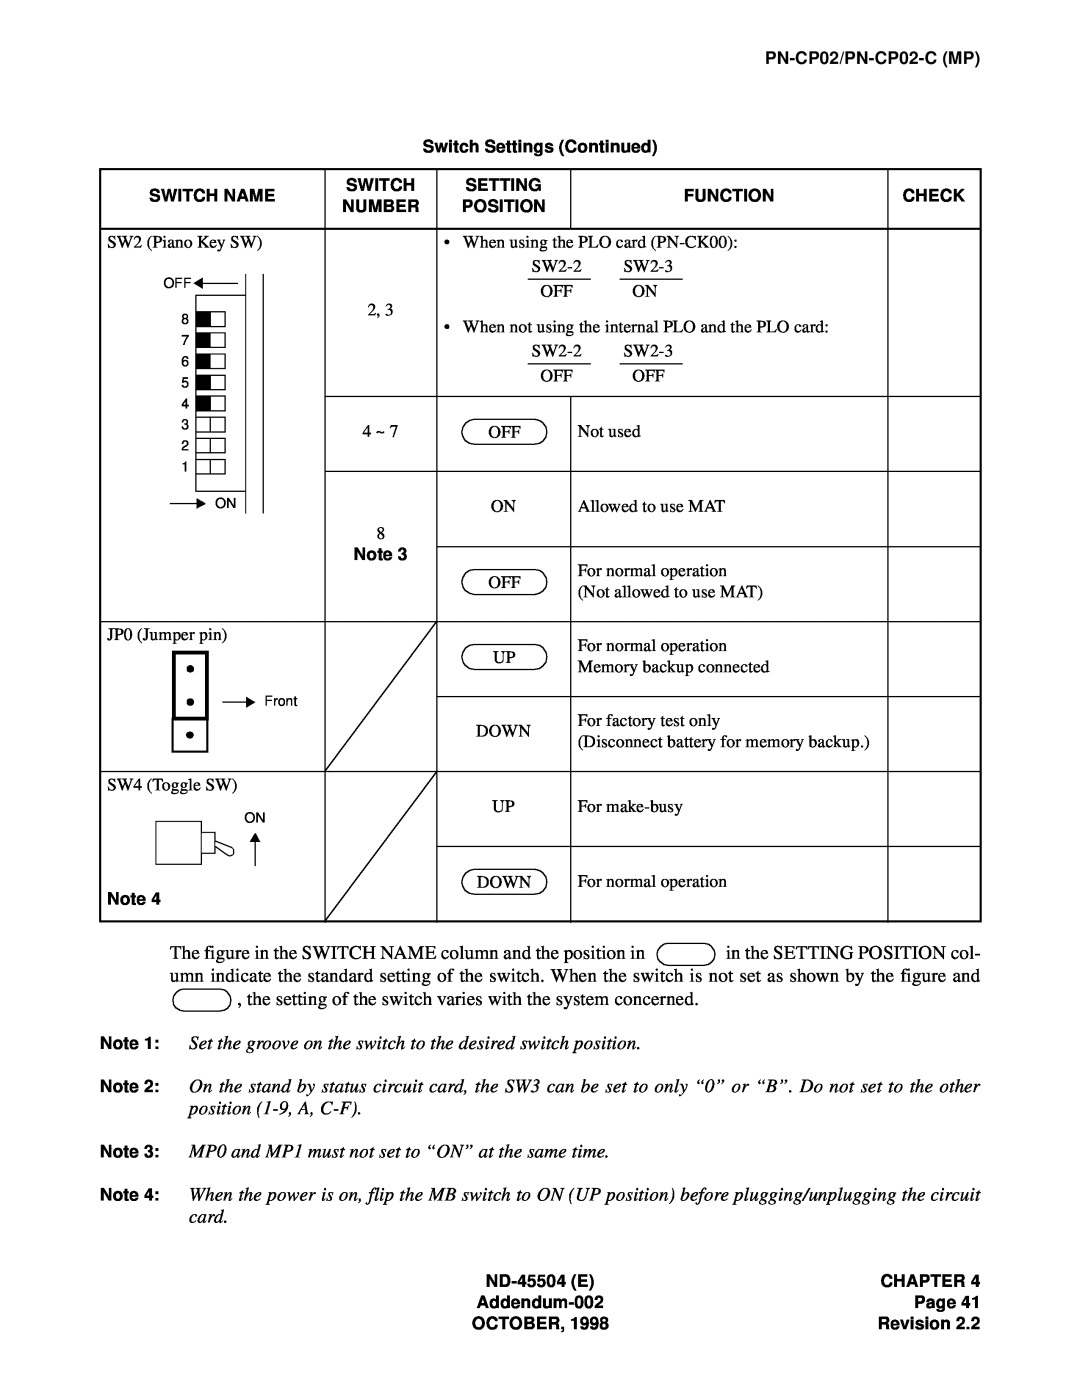 NEC 2000 IVS manual PN-CP02/PN-CP02-CMP Switch Settings Continued 